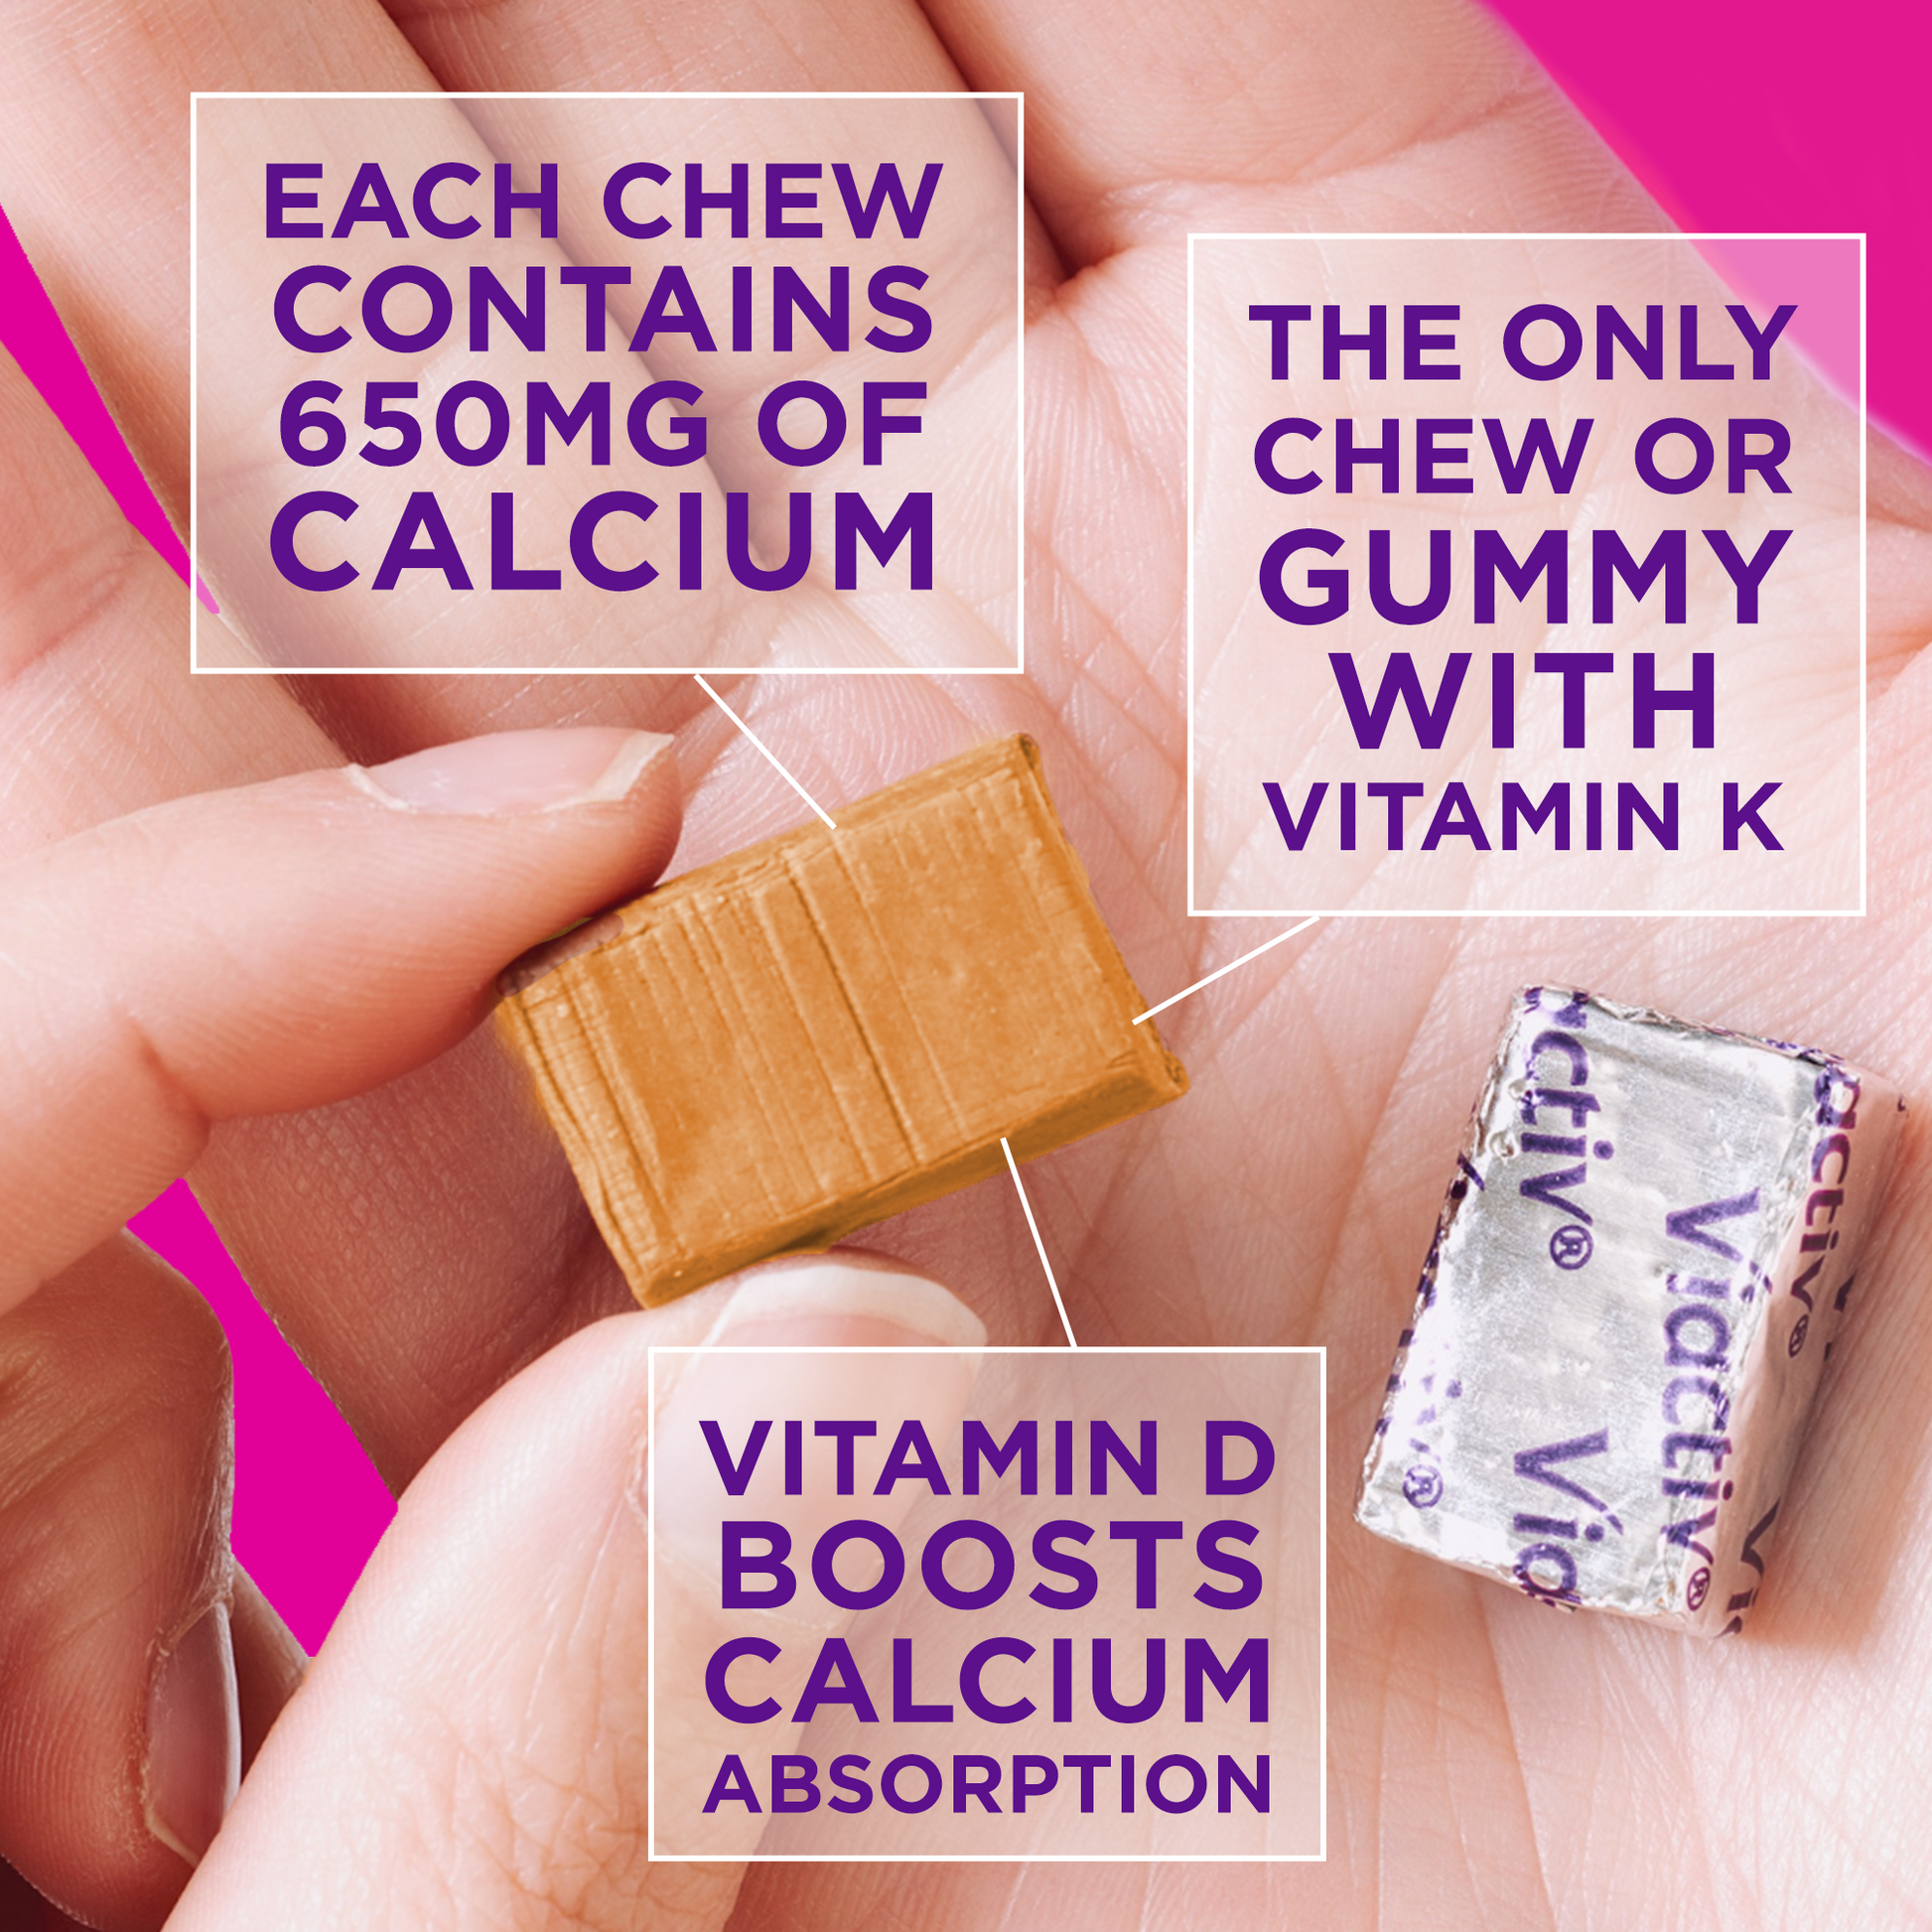 Facts about Viactiv caramel calcium chews